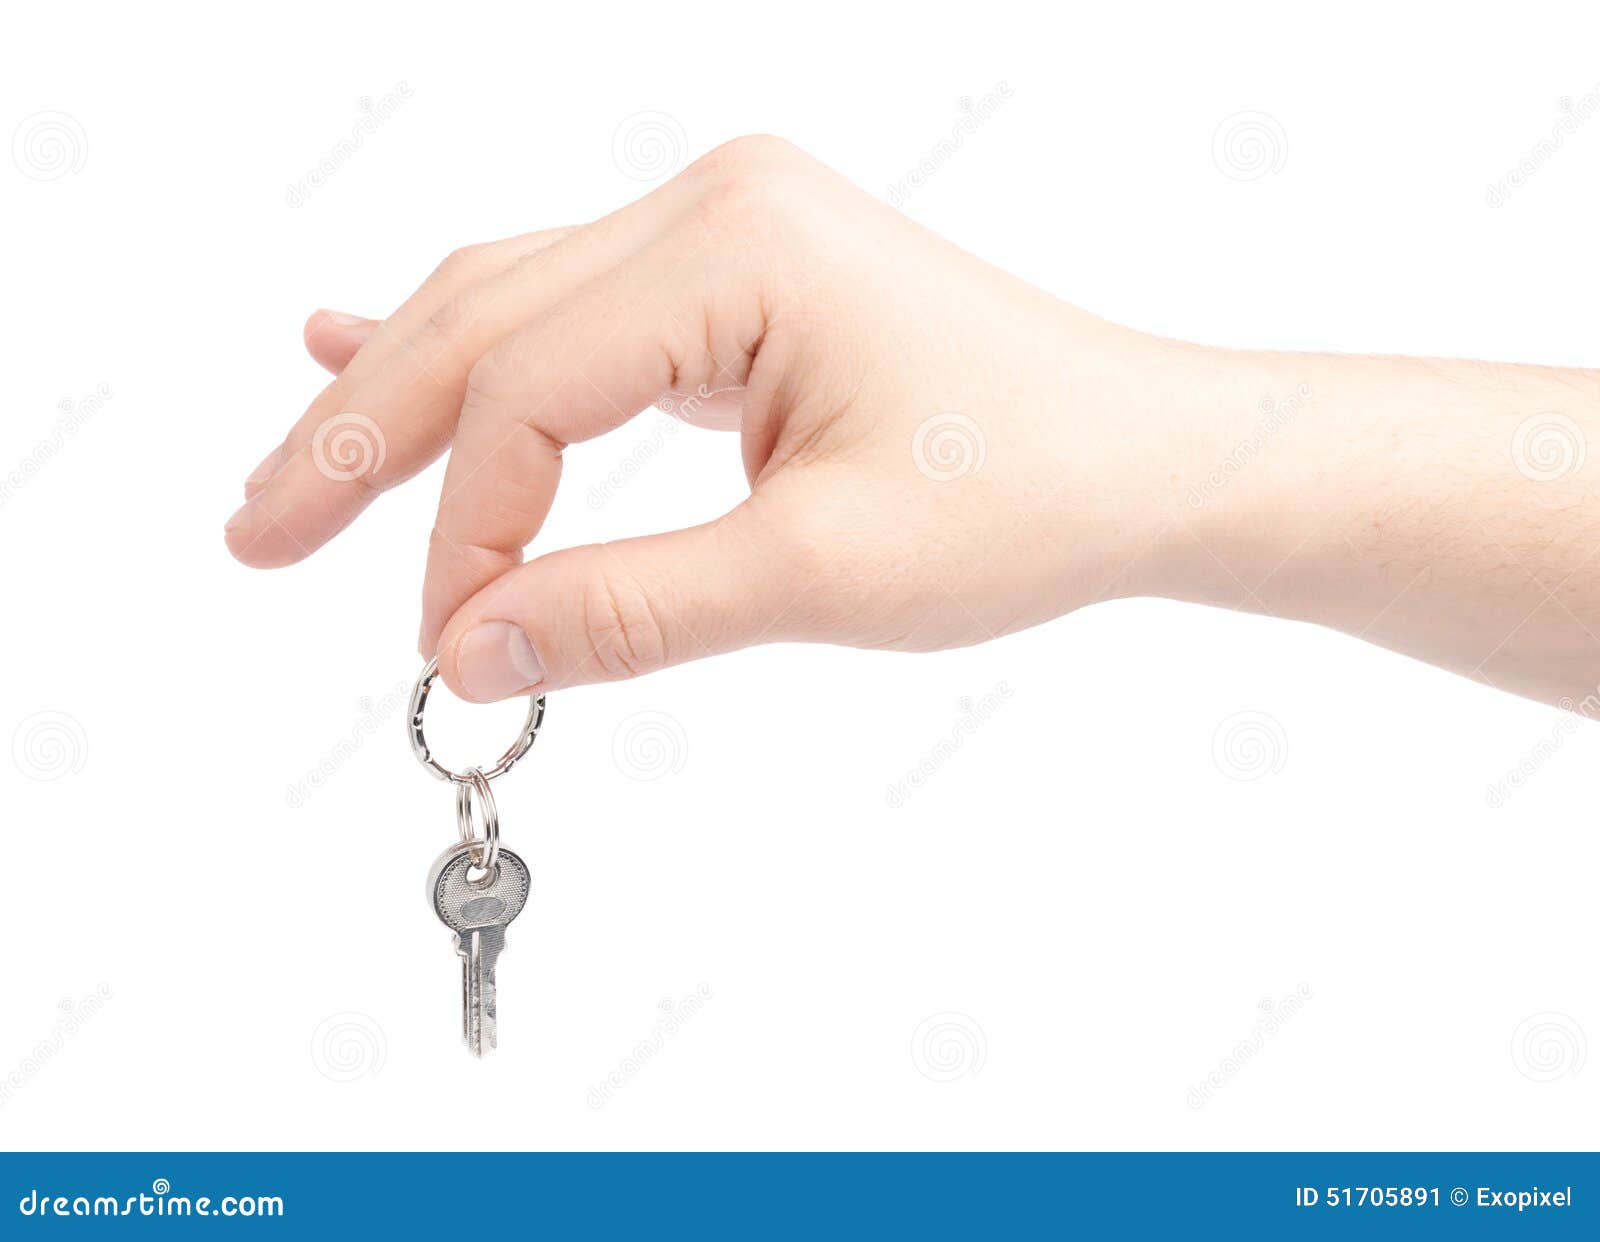 Small key. Брелок в руке. Девушка держит в руках брелок. Держит брелок. Держаться за руки брелок.